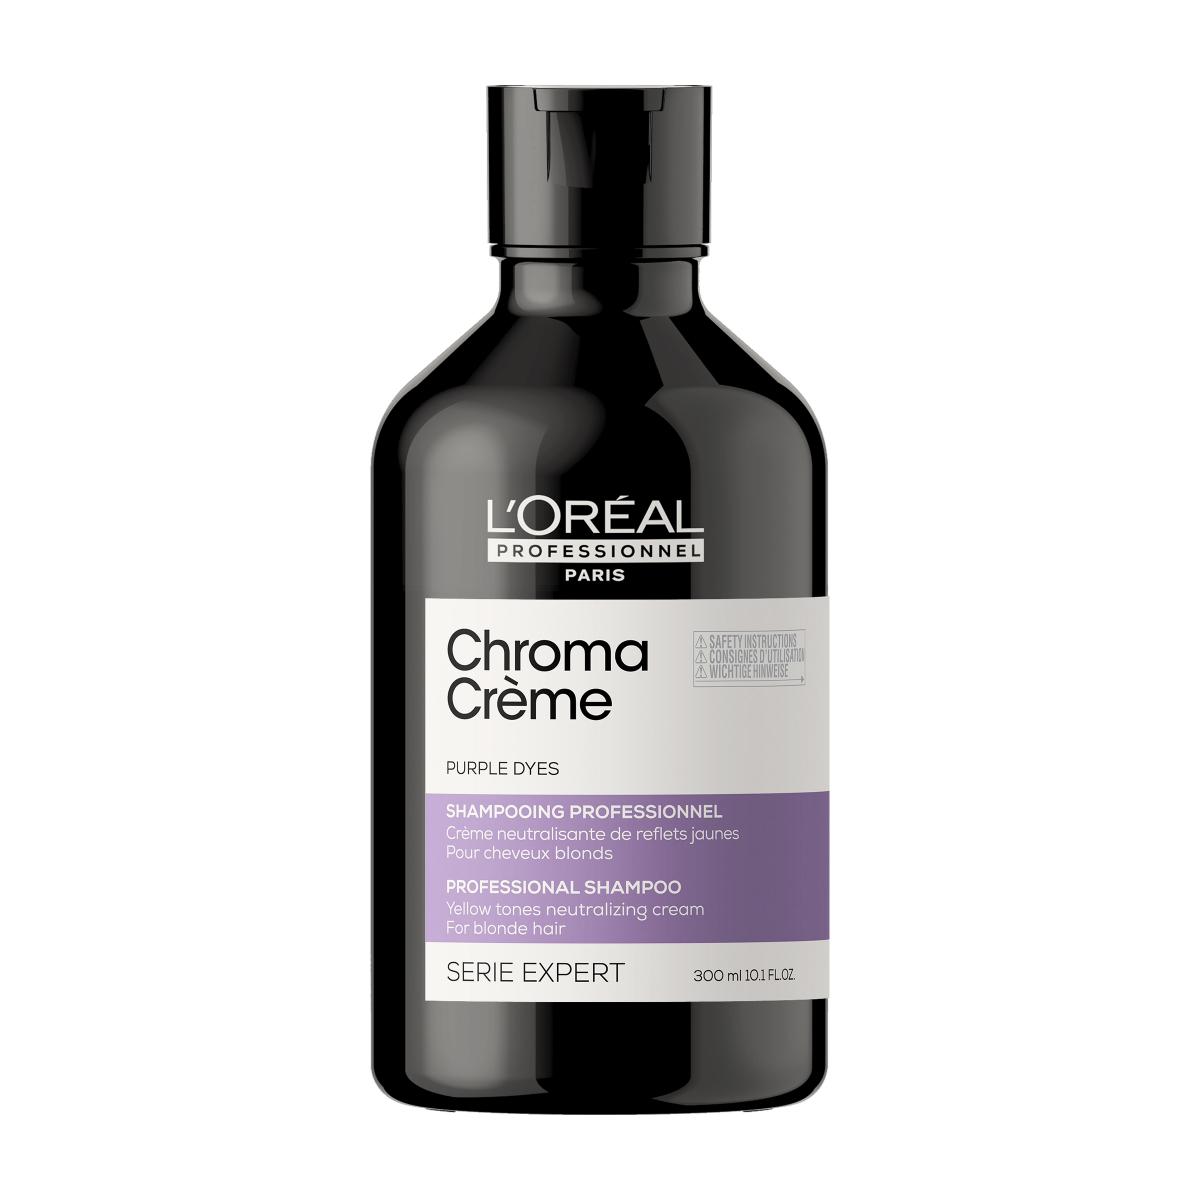 Chroma Crème Purple Dyes